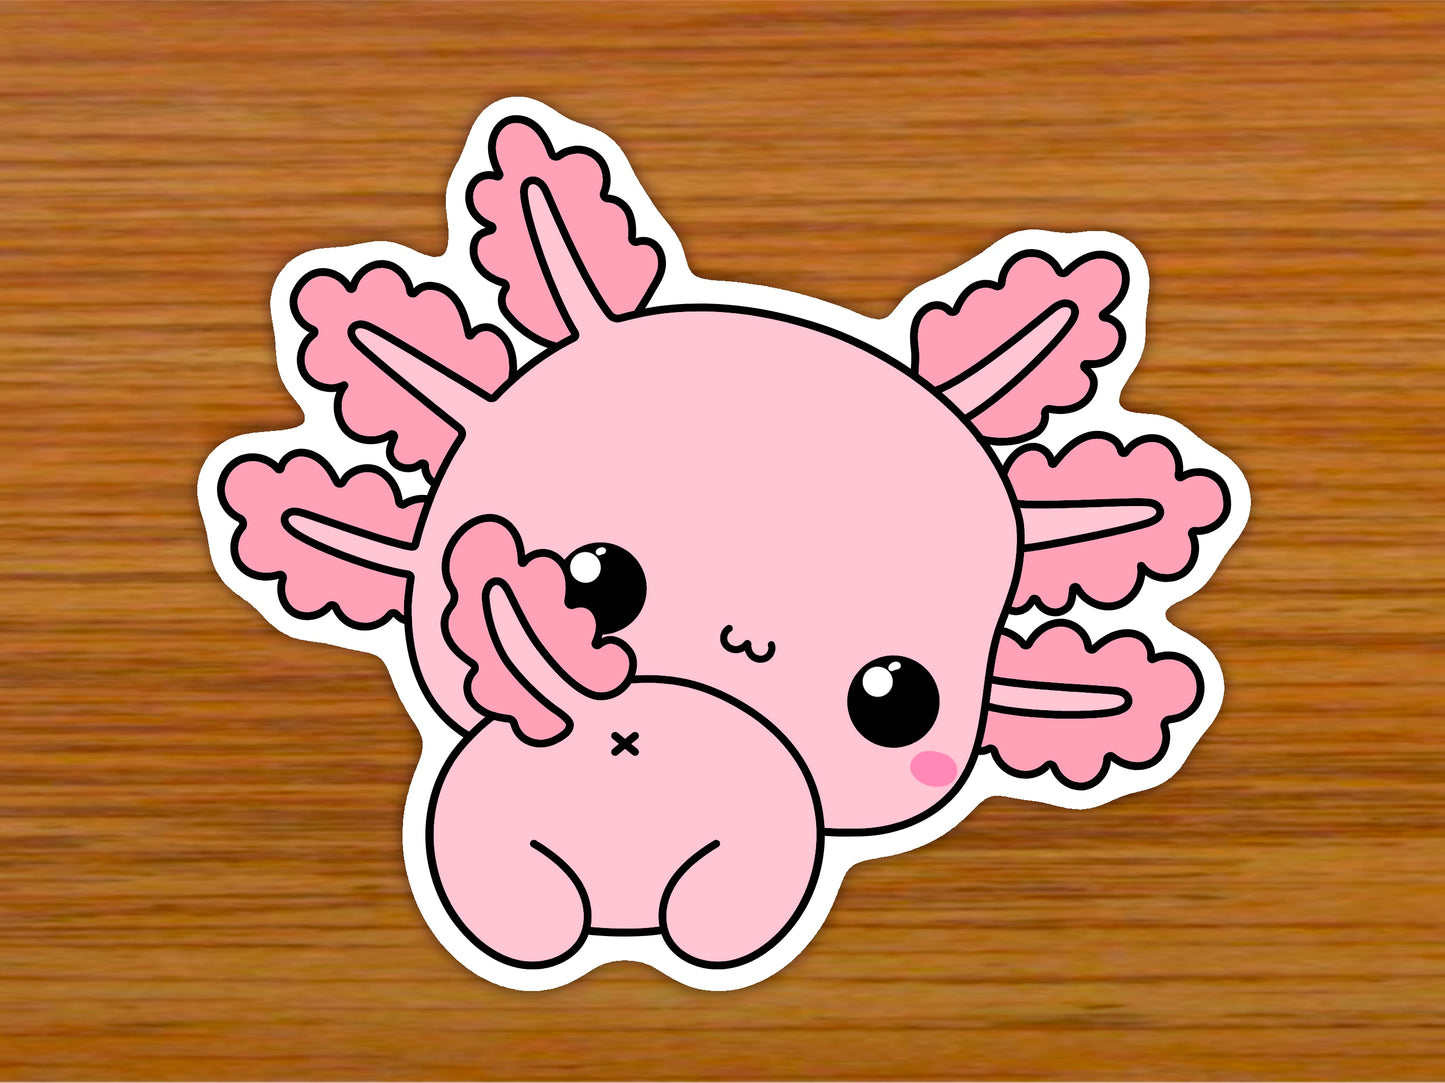 Cute kawaii Axolotl butt sticker | premium high gloss eco-friendly vinyl